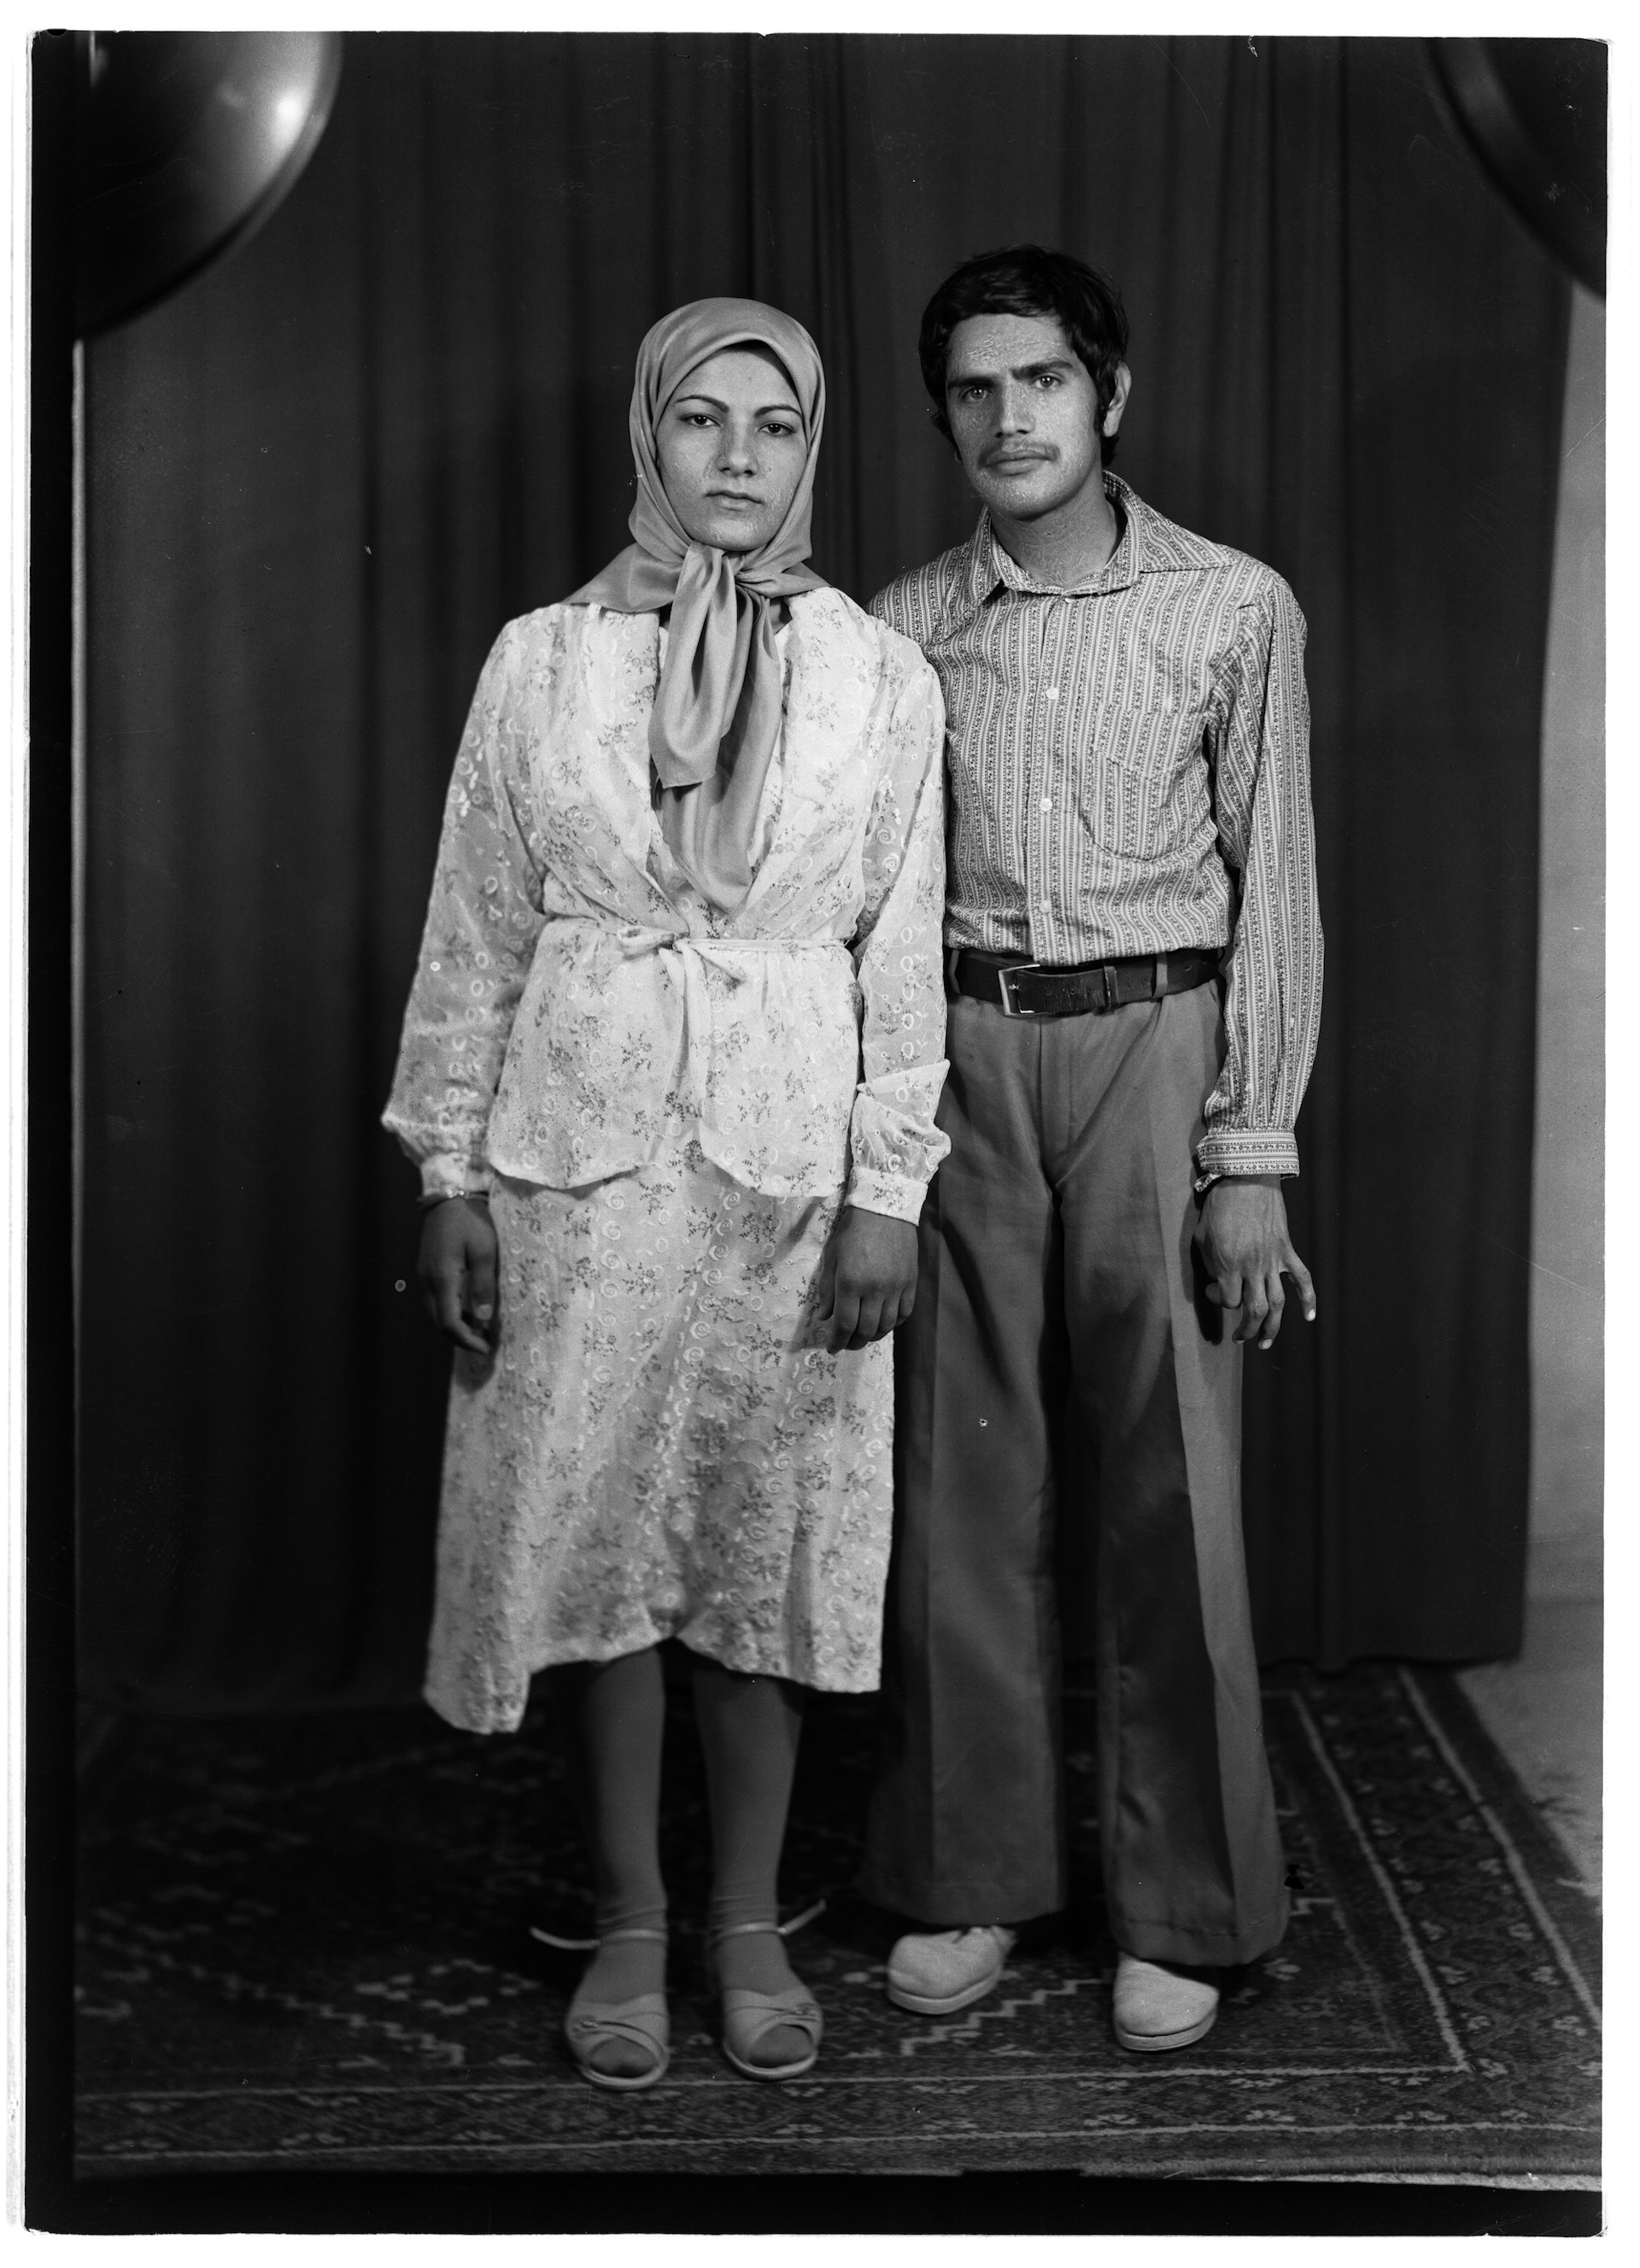 Iranian Photo Studio of pre-Islamic revolution. Collection of Shadi Ghadirian. 